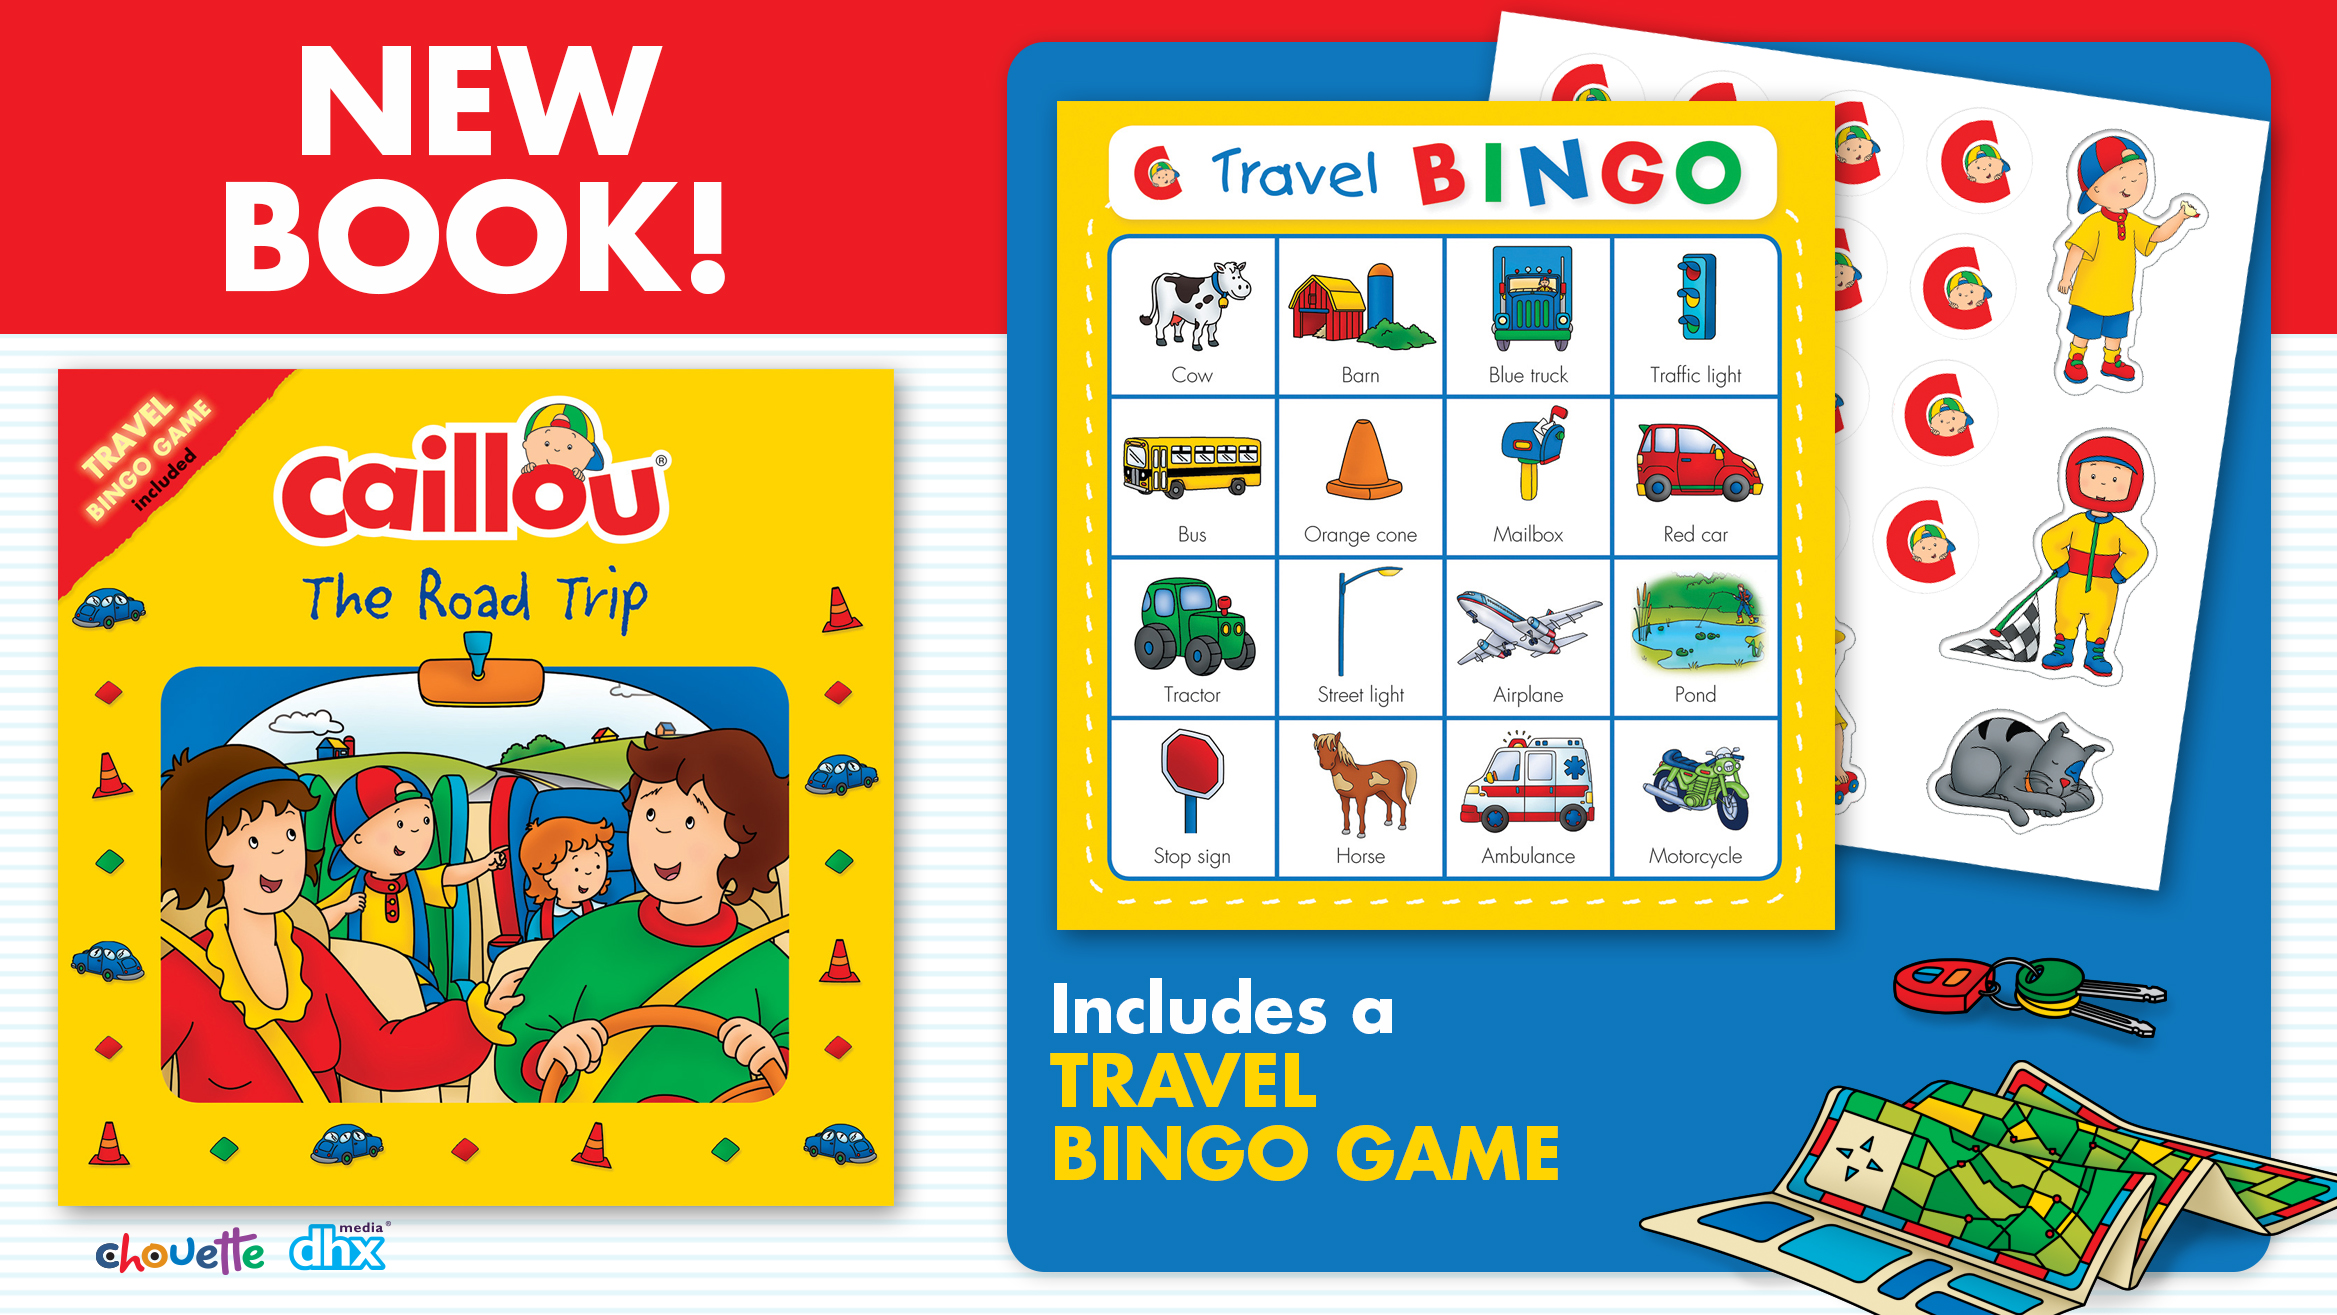 Caillou book cover and bingo game